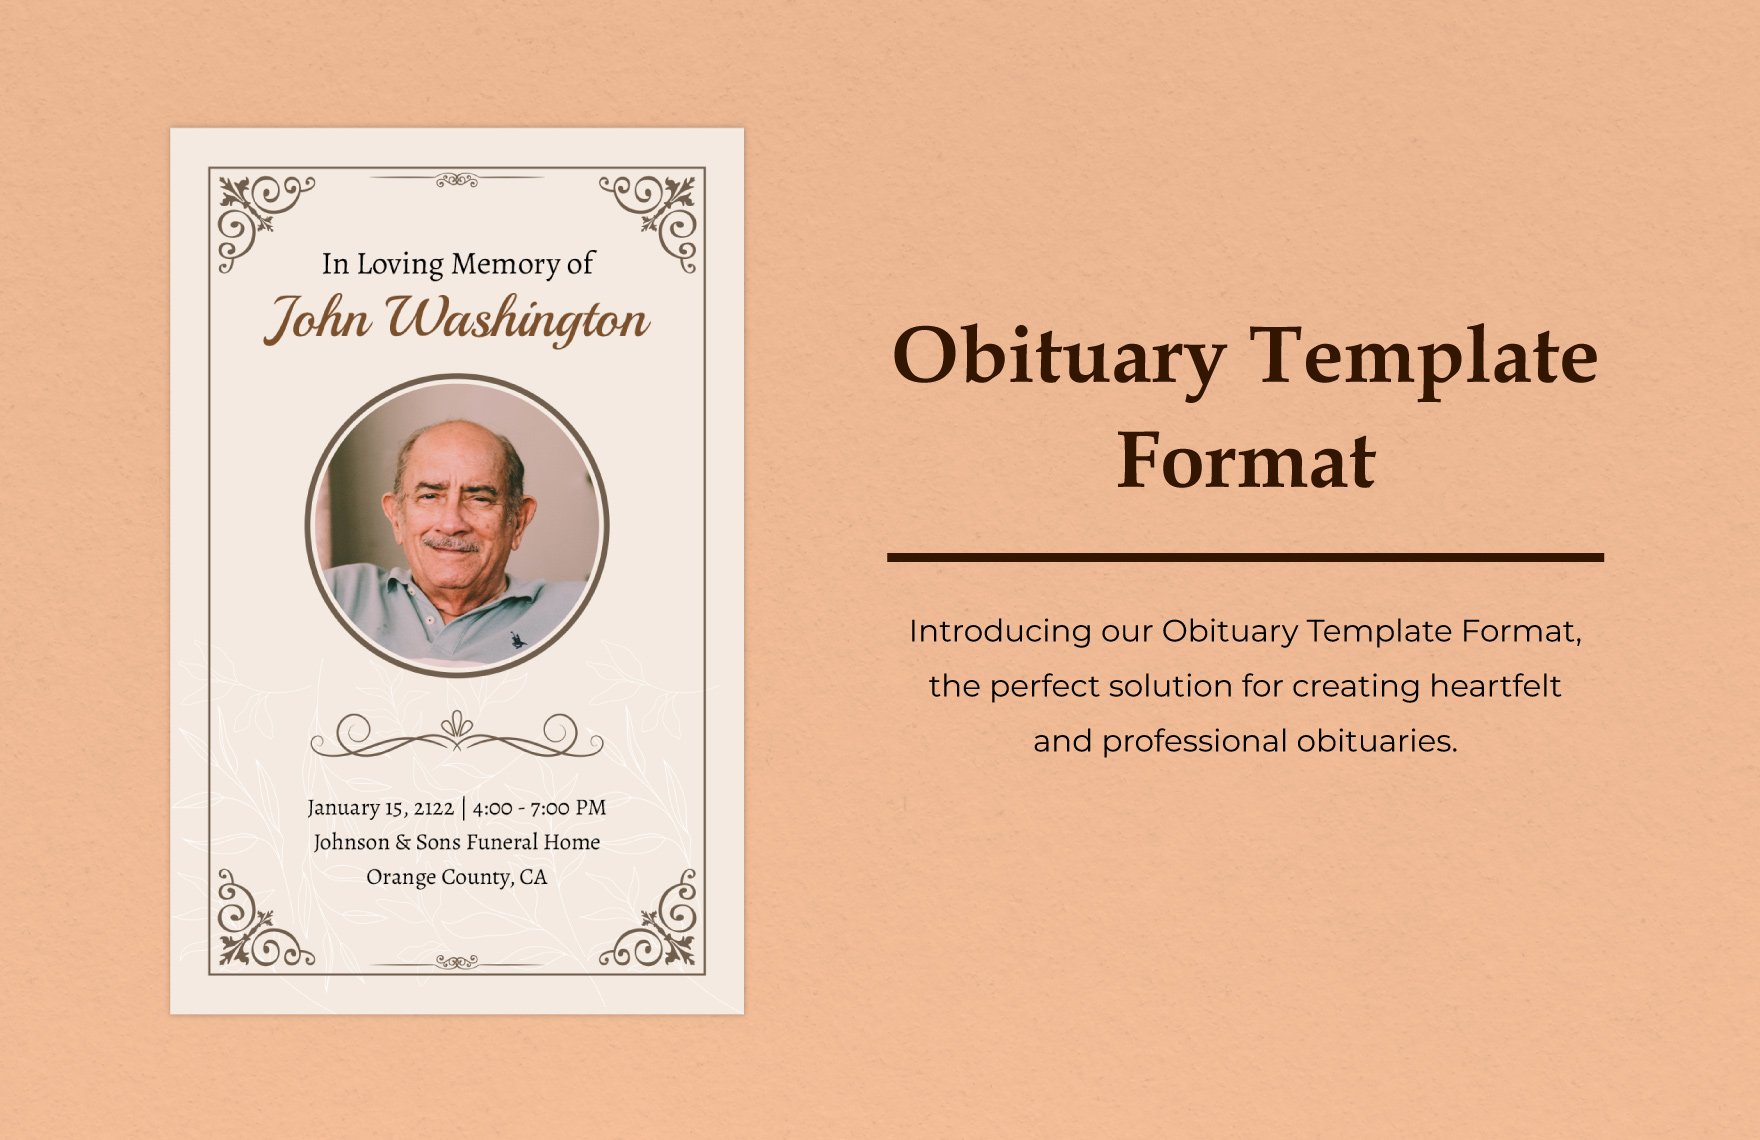 Obituary Template Format